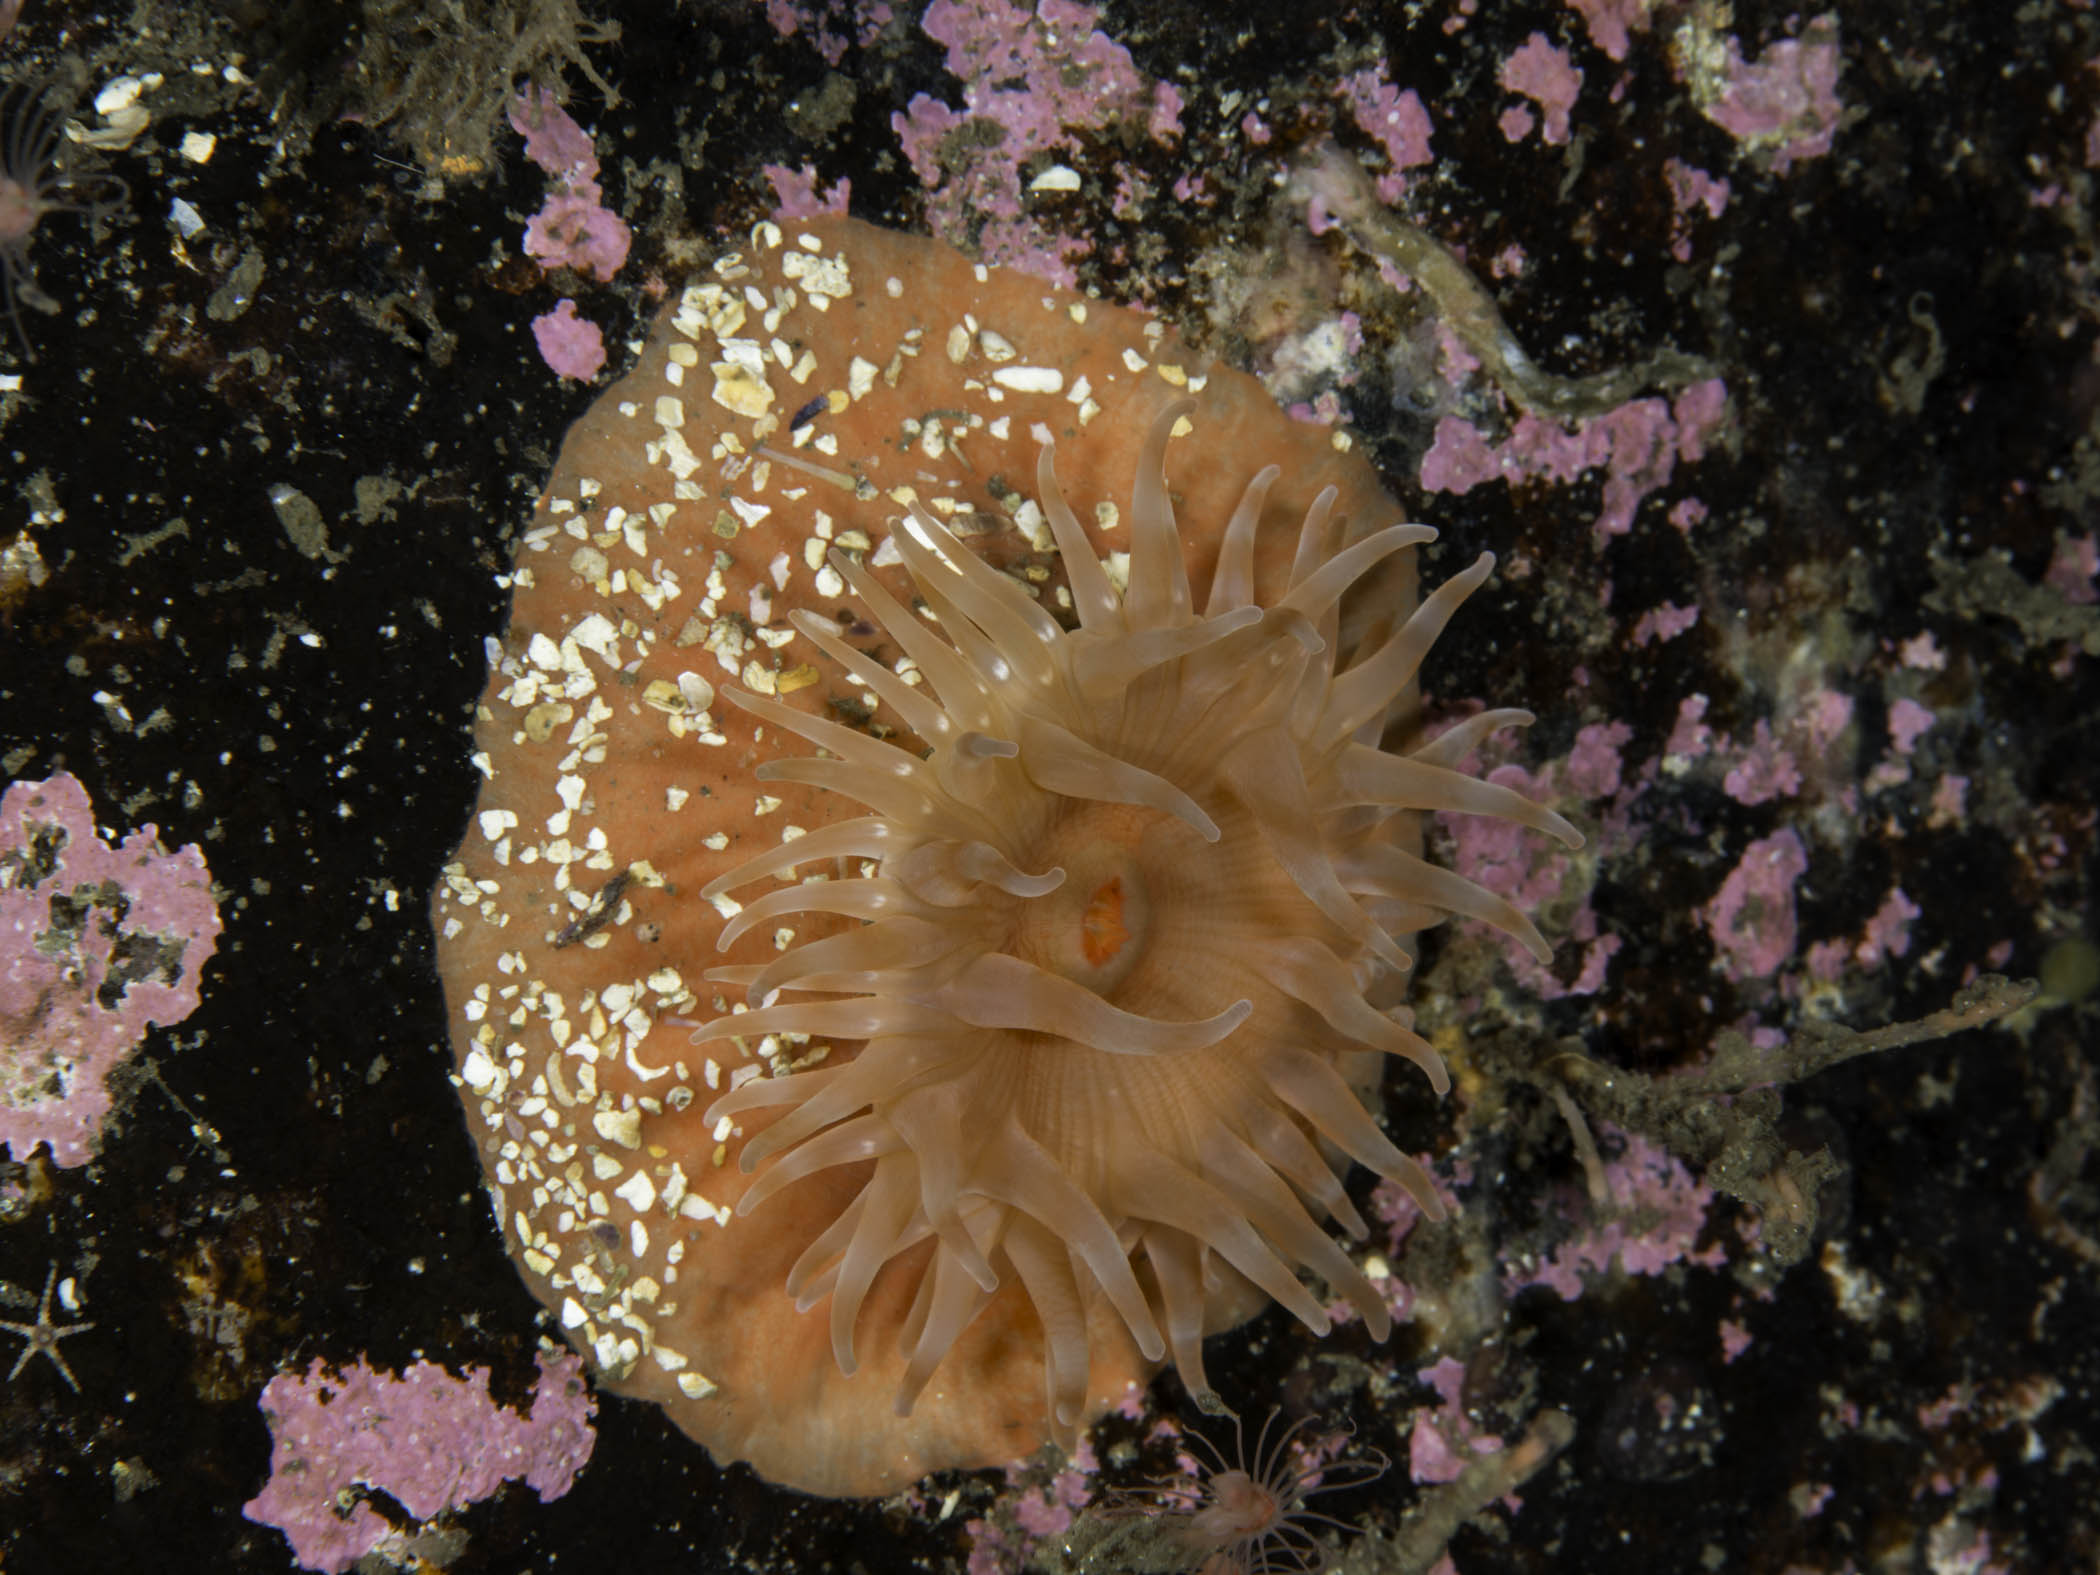 image: Stomphia coccinea. Gulen, Norway, 2014.